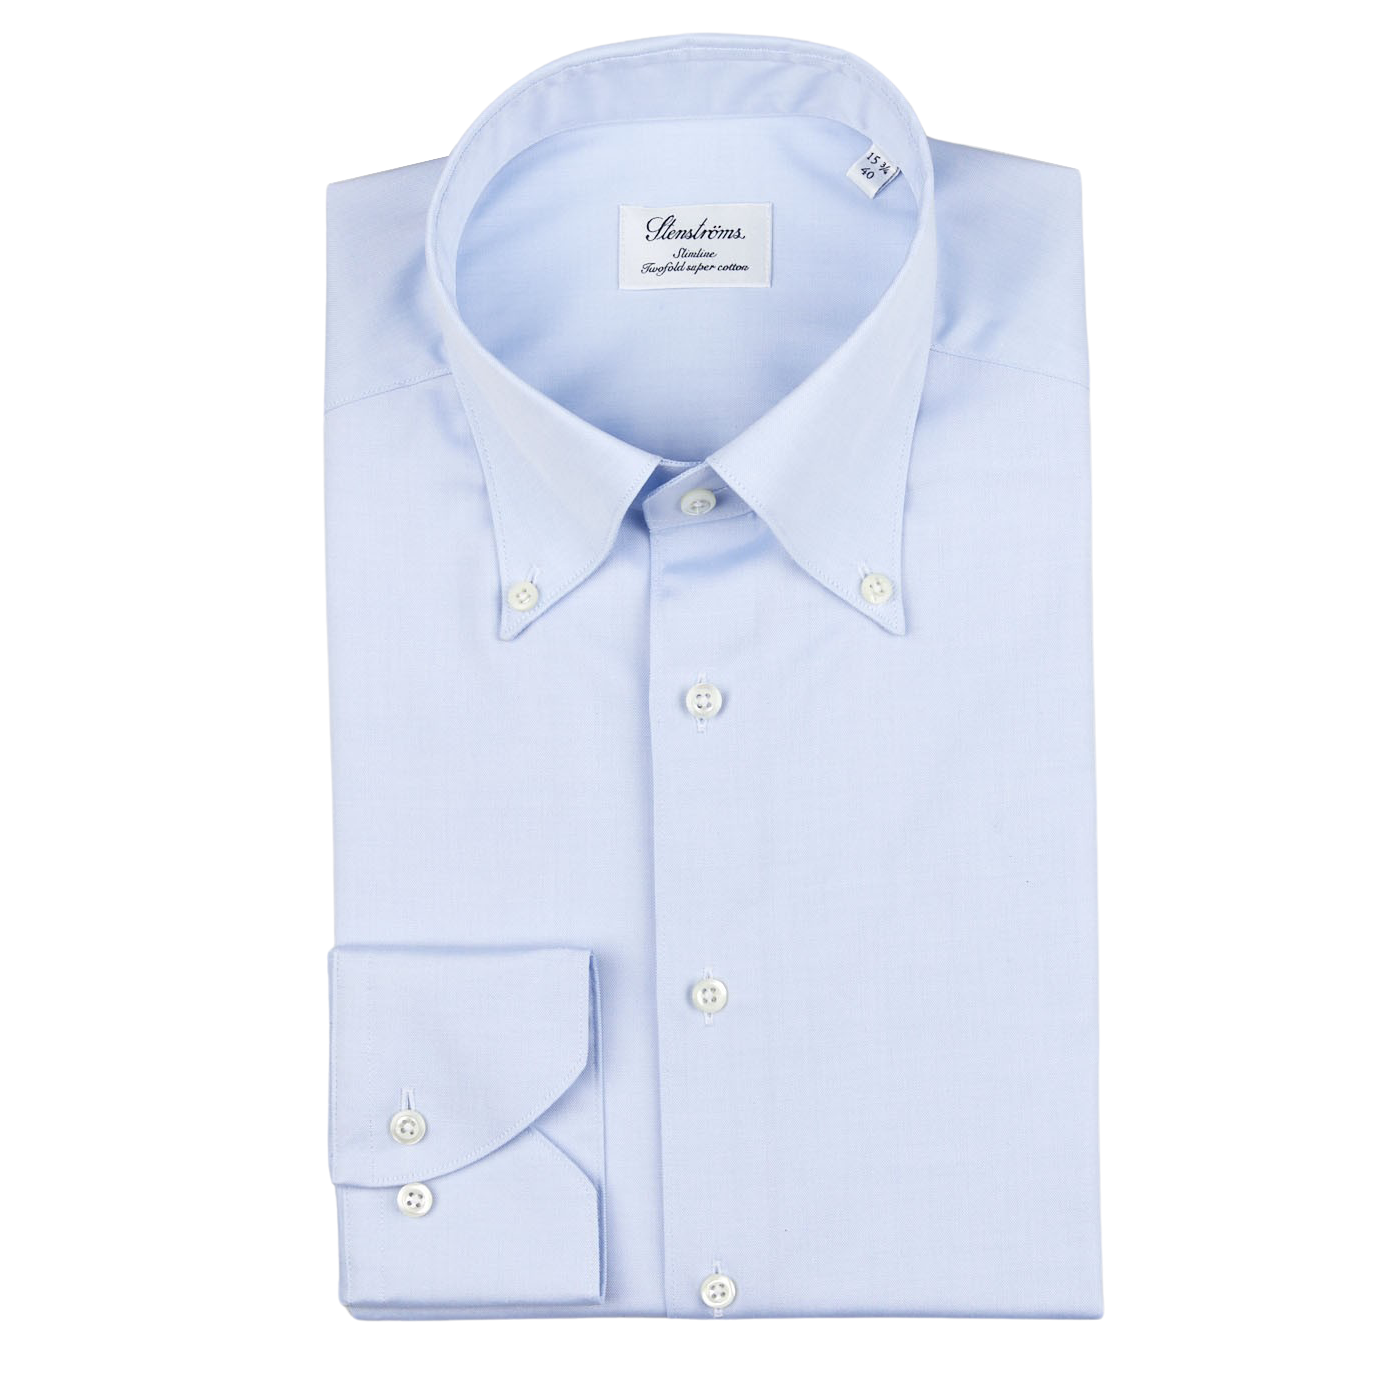 A Light Blue Cotton Oxford BD Slimline Shirt made by Stenströms with a button-down collar.